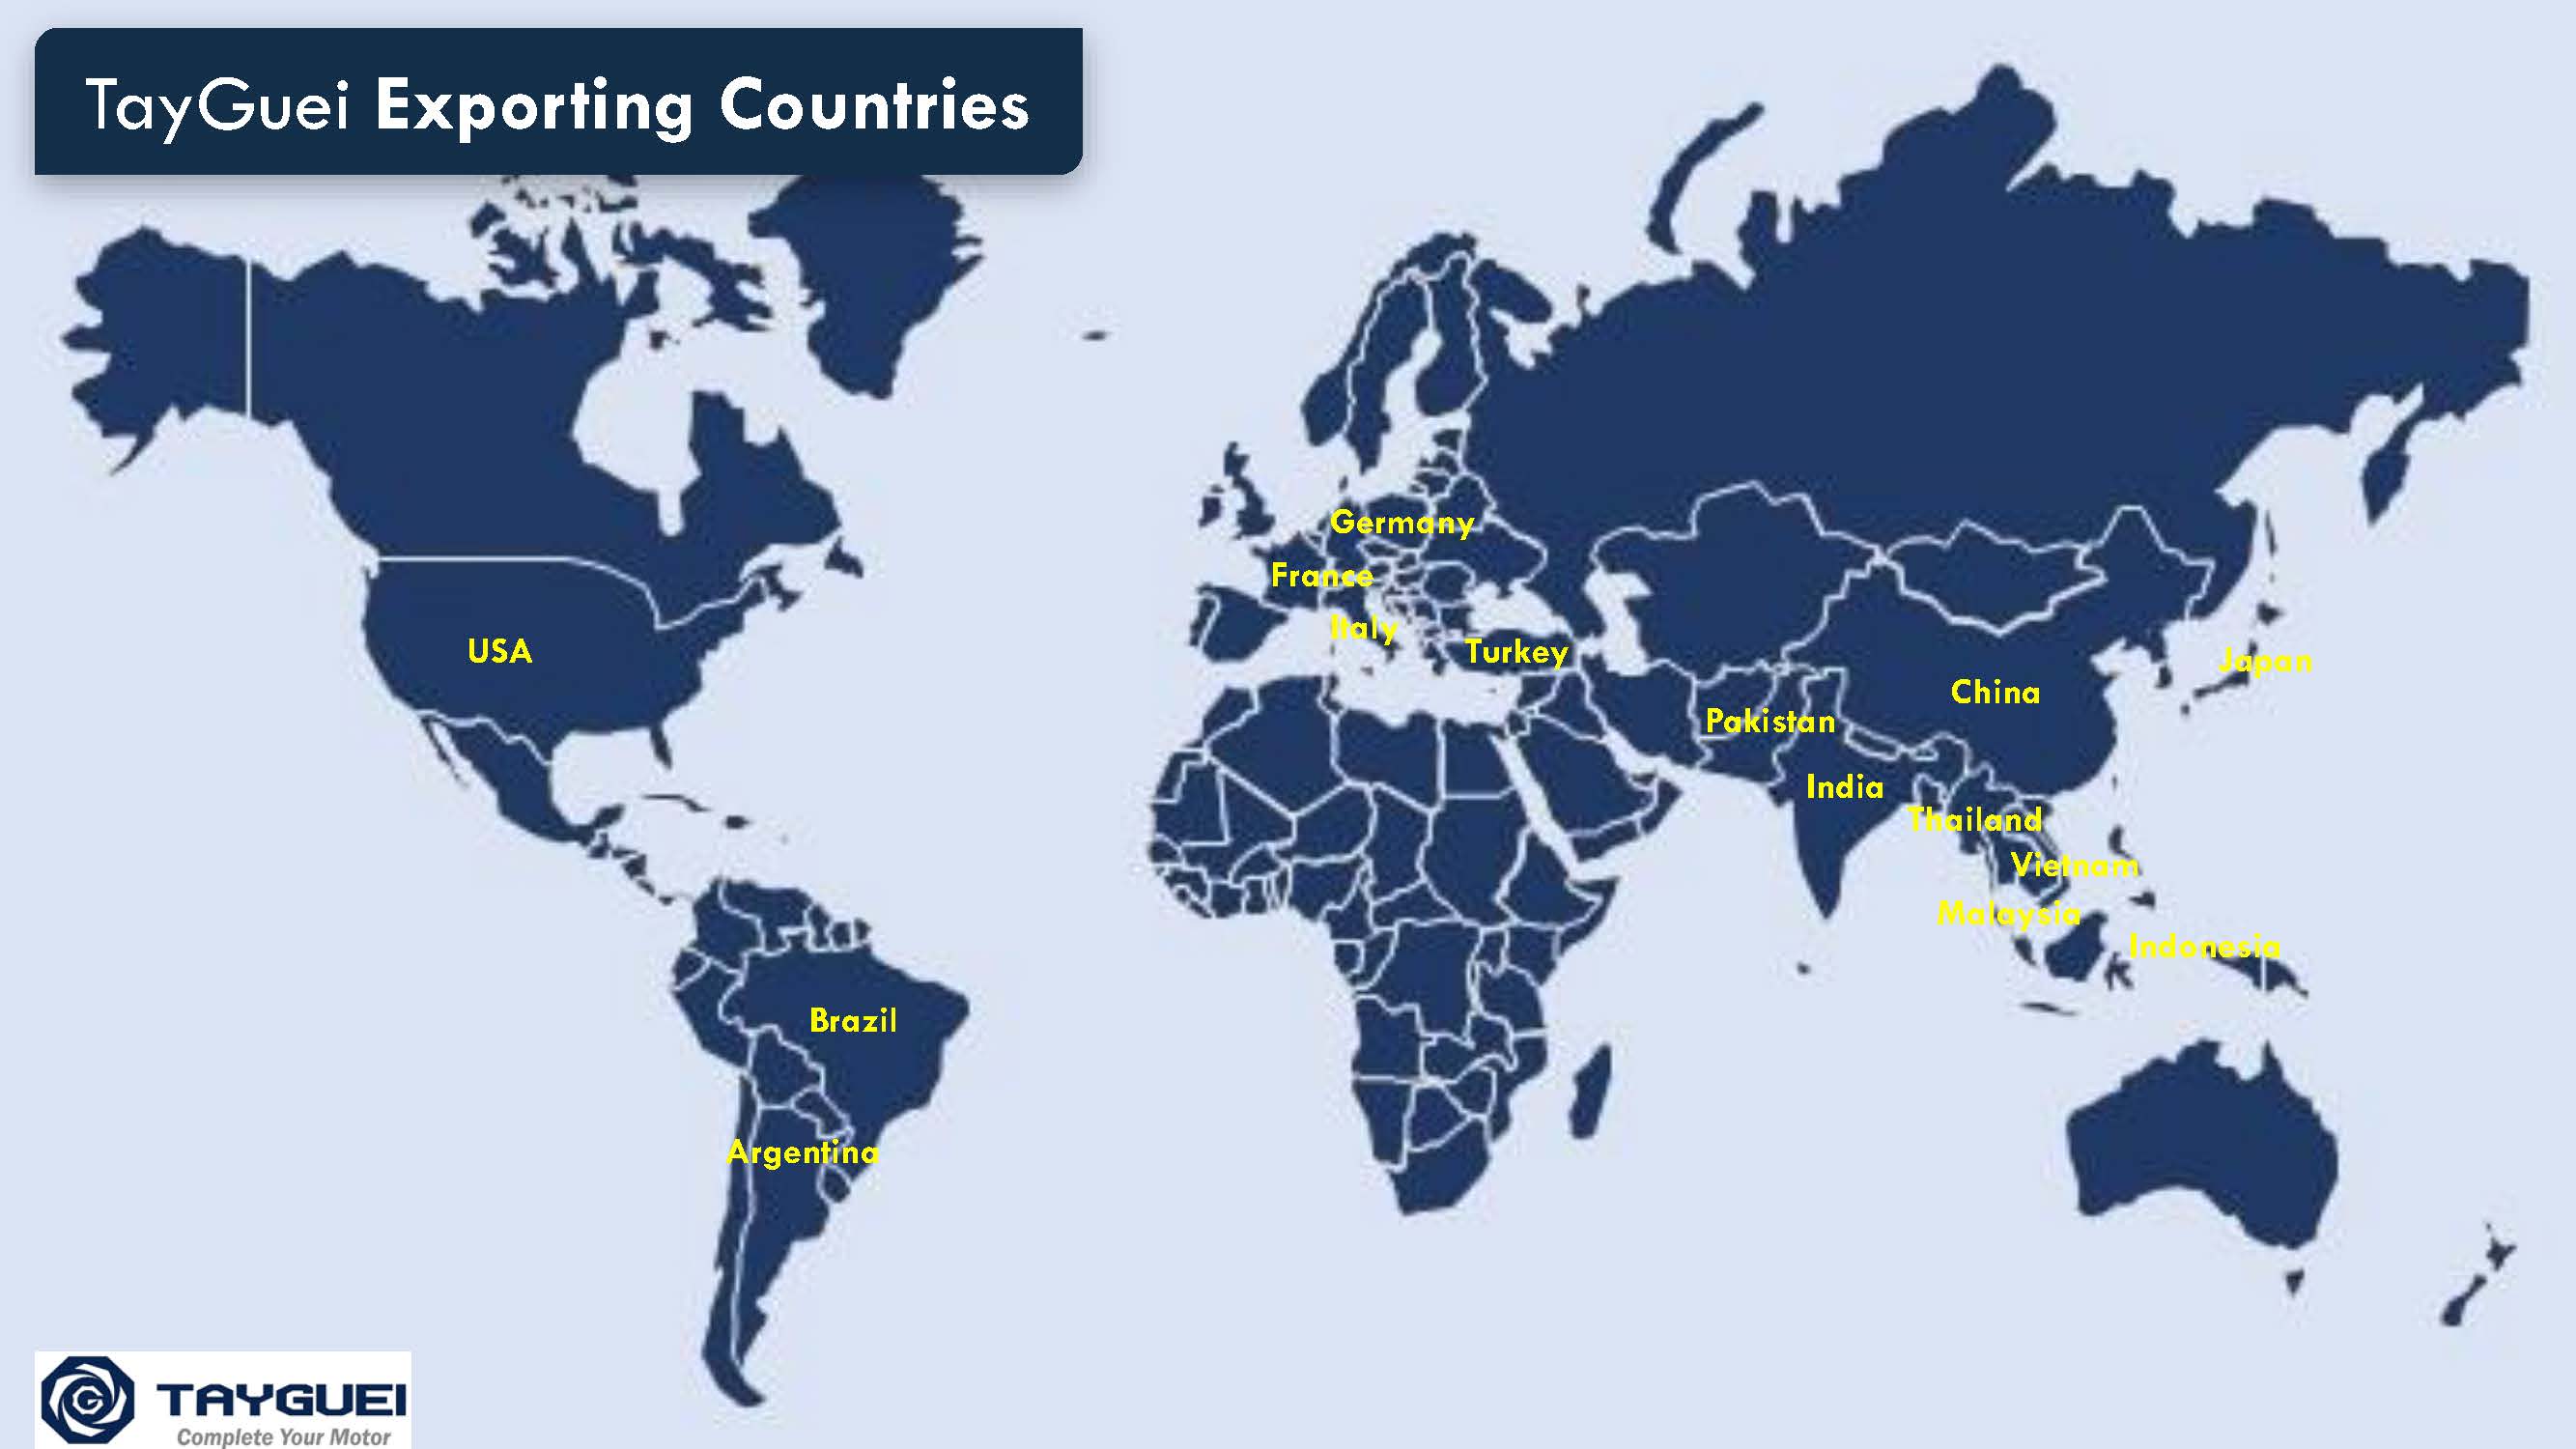 Hay 15 países para exportar.